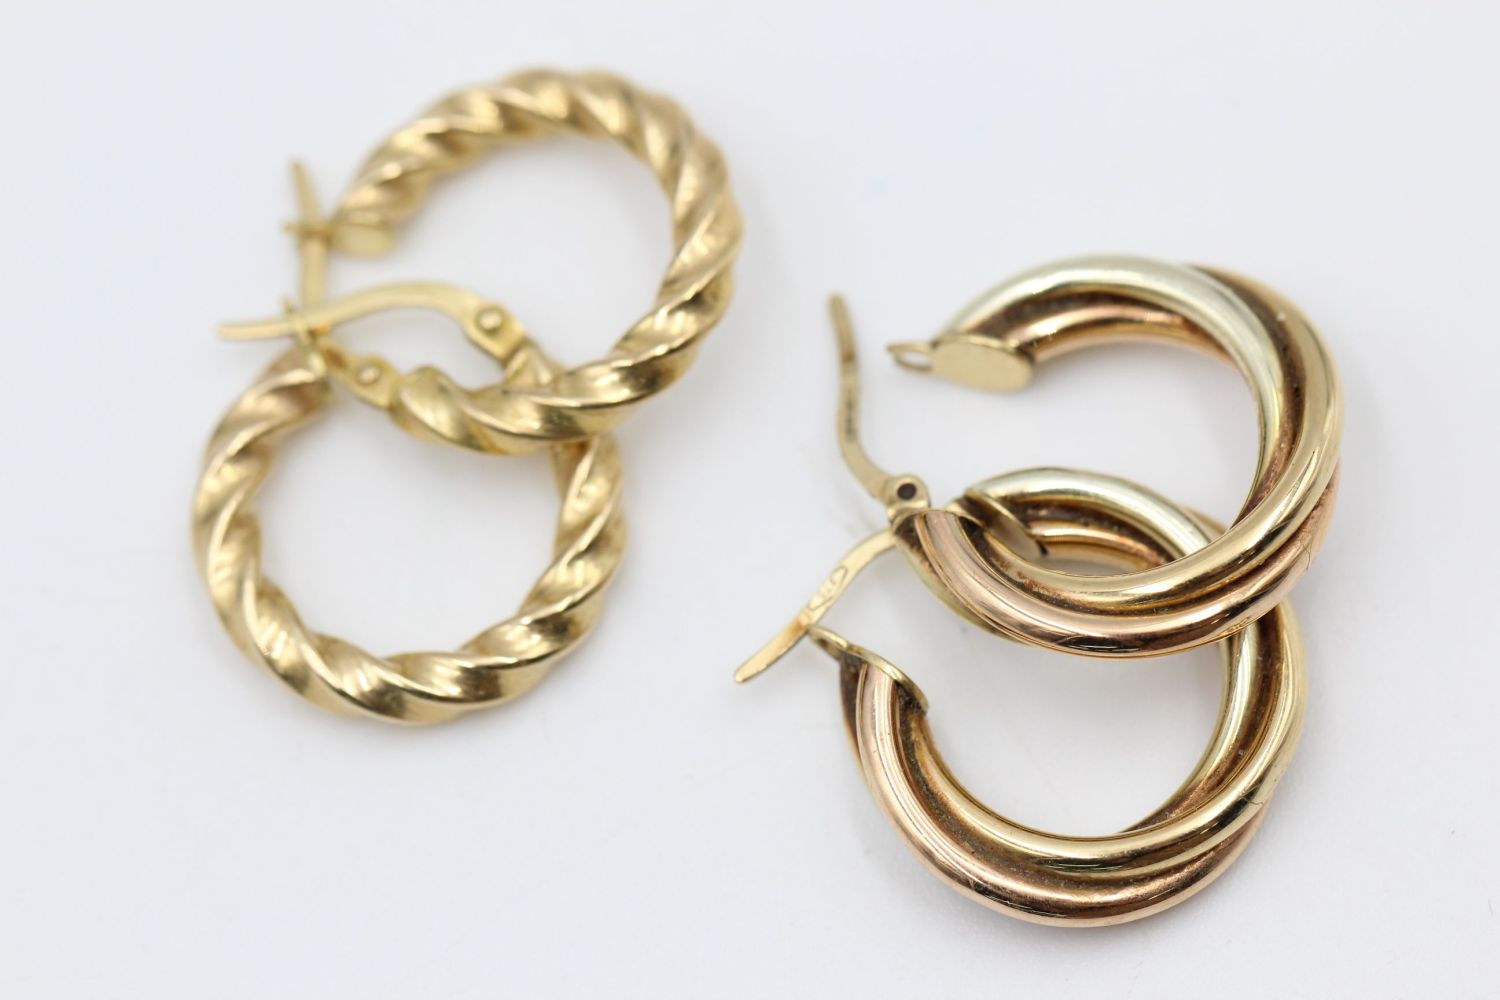 2 x 9ct gold tricolor and rope twist hoop earrings 4.2 grams gross